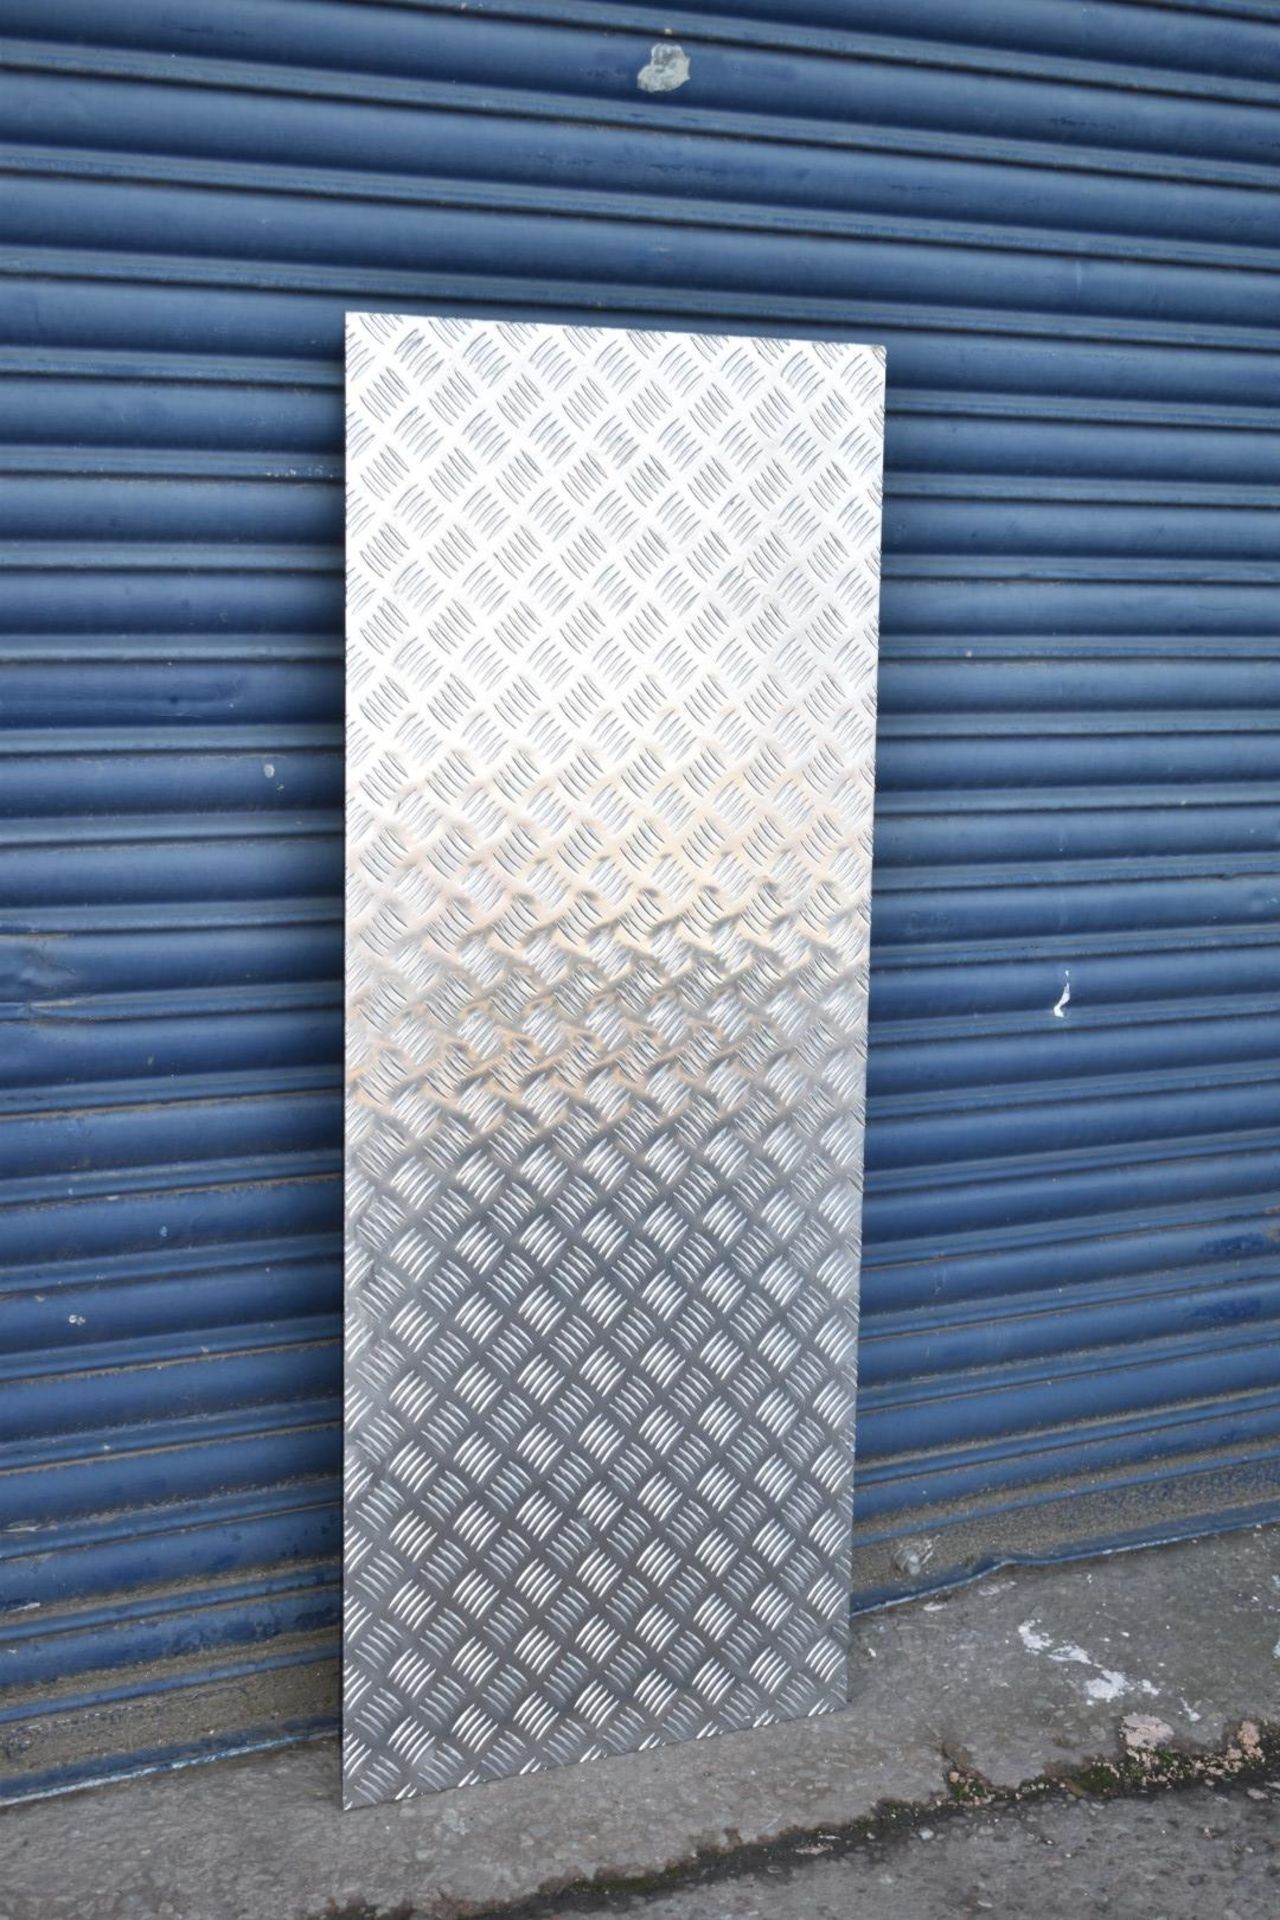 1 x Aluminium Tread Checker Plate - Size 125 x 50.5 x 0.3 cms - None Slip Floor Plate Suitable